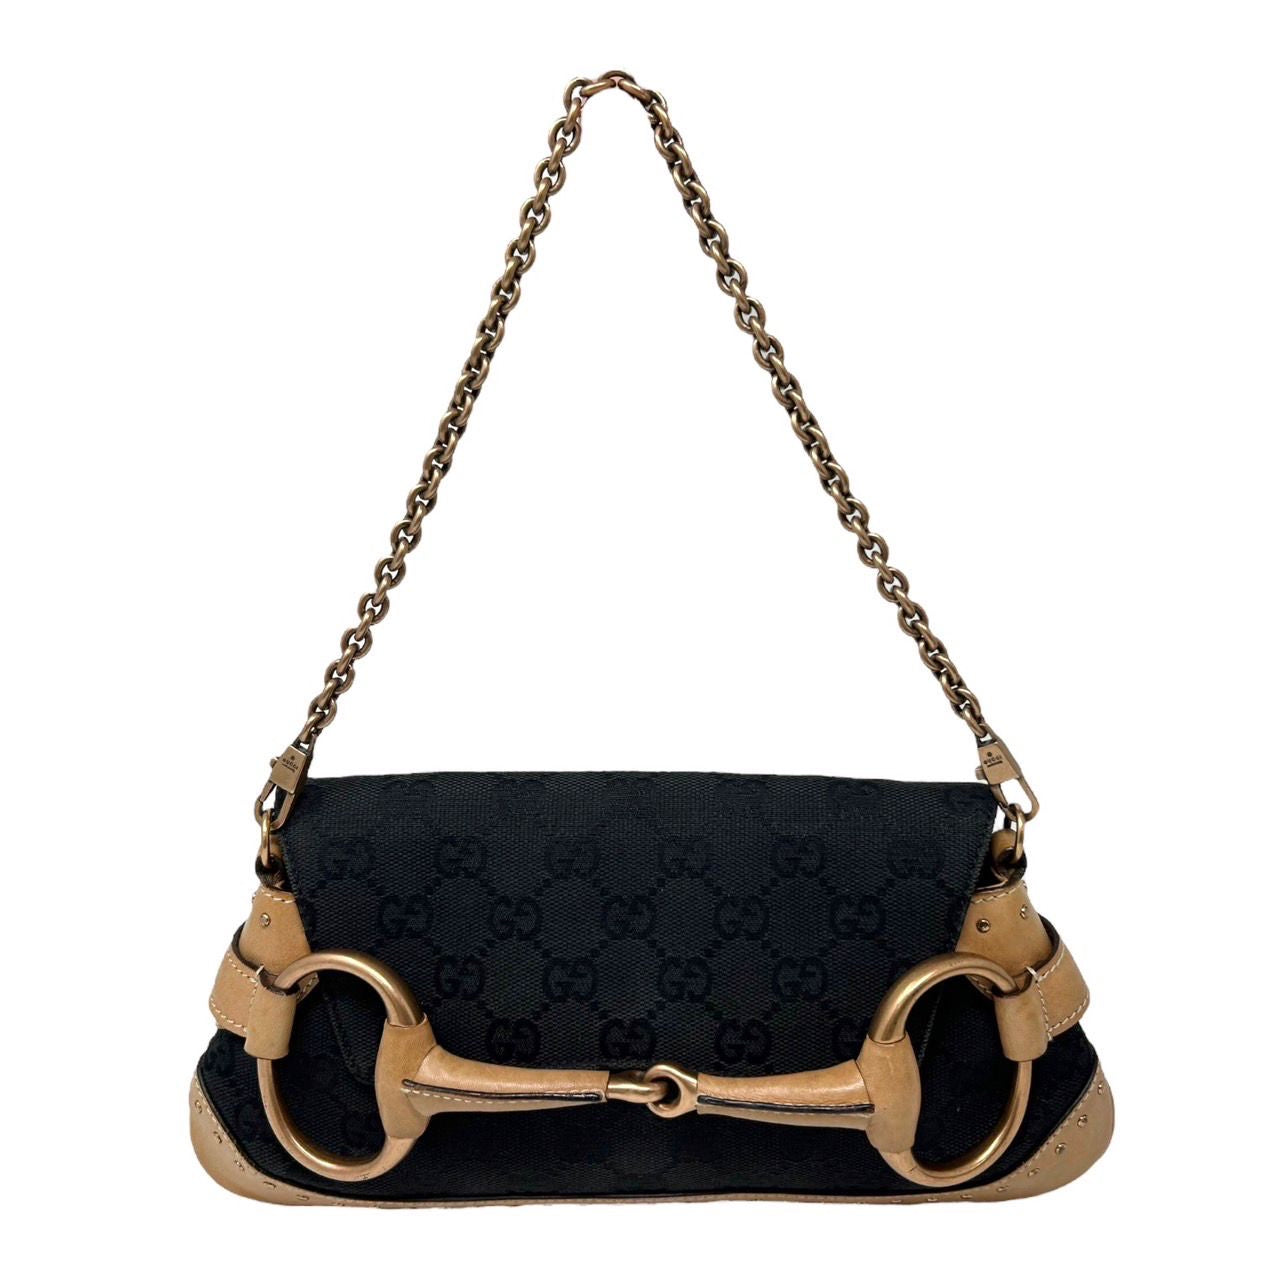 Gucci Two-Tone Horsebit Chain Shoulder Bag